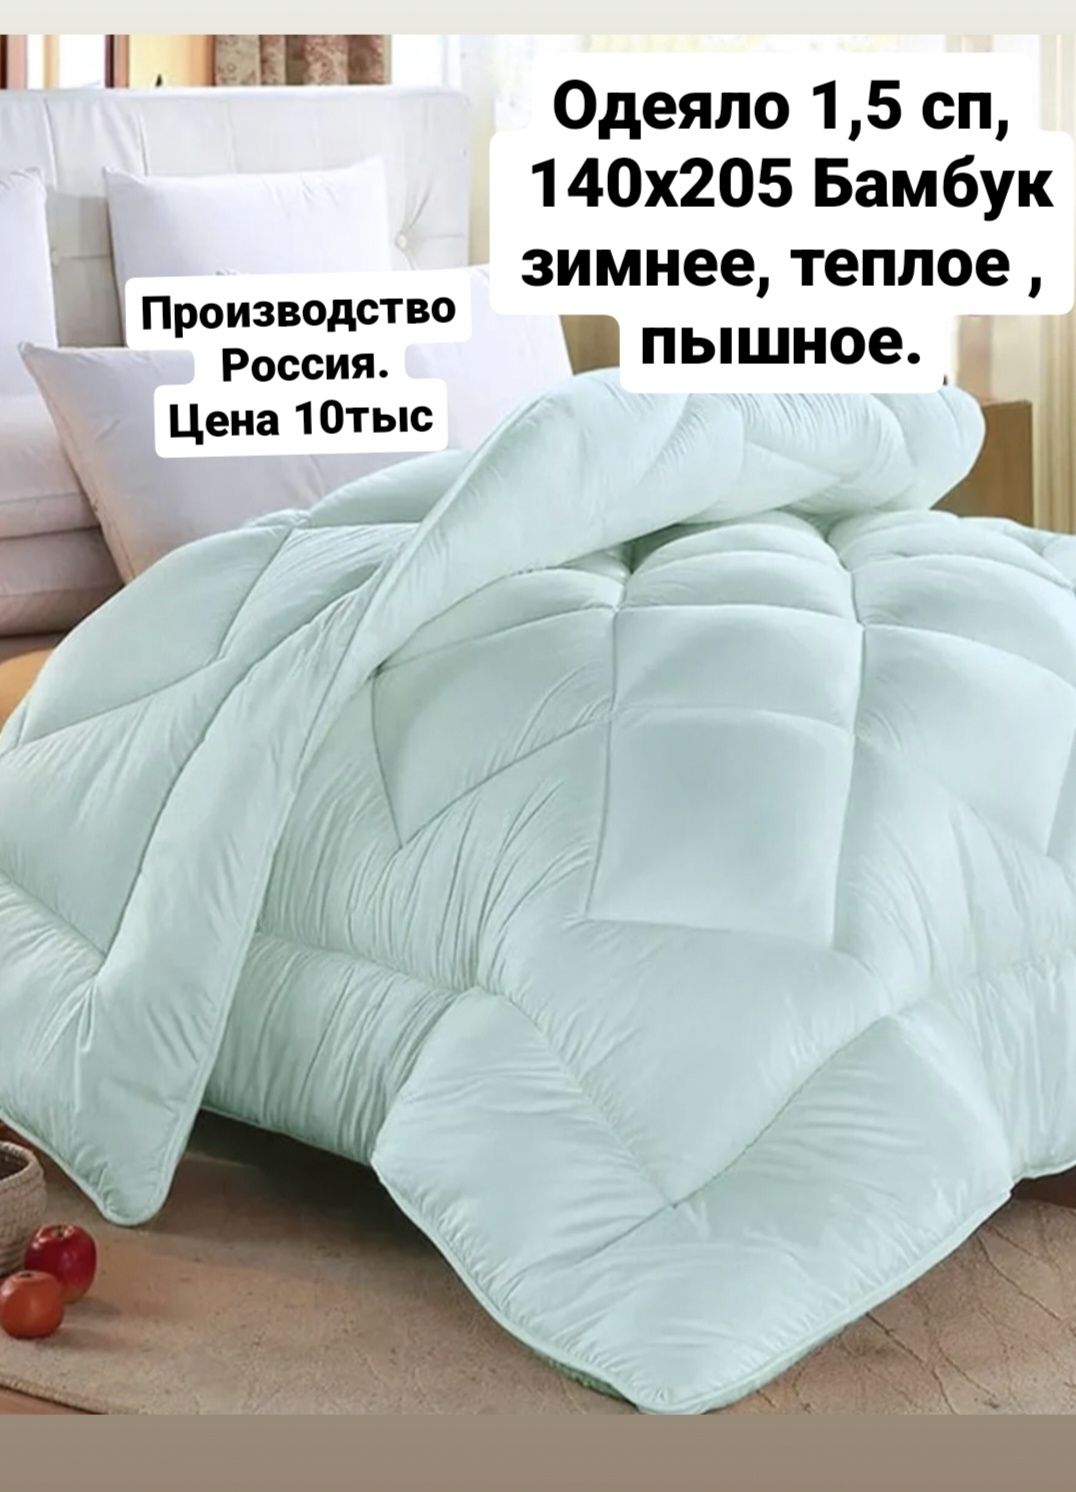 Зимнее тёплое одеяло производство Россия